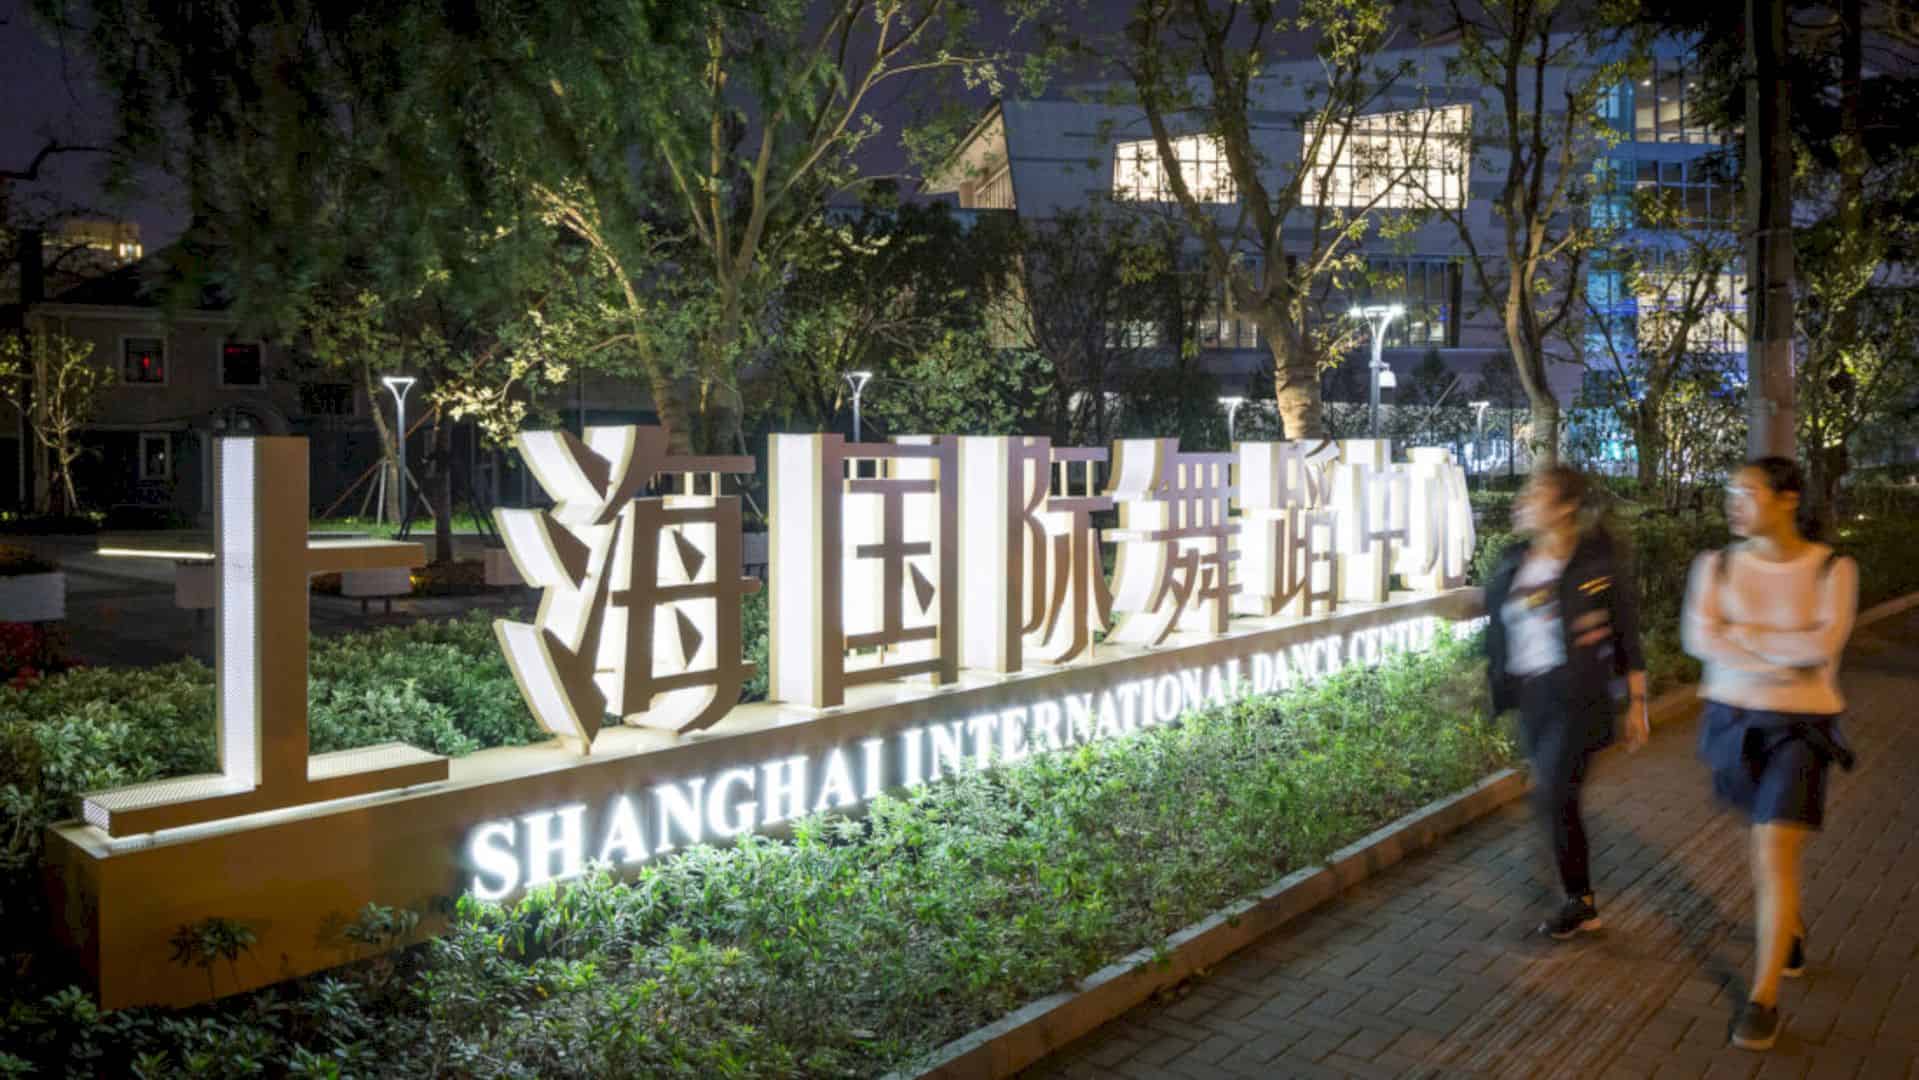 Shanghai International Dance Center 1